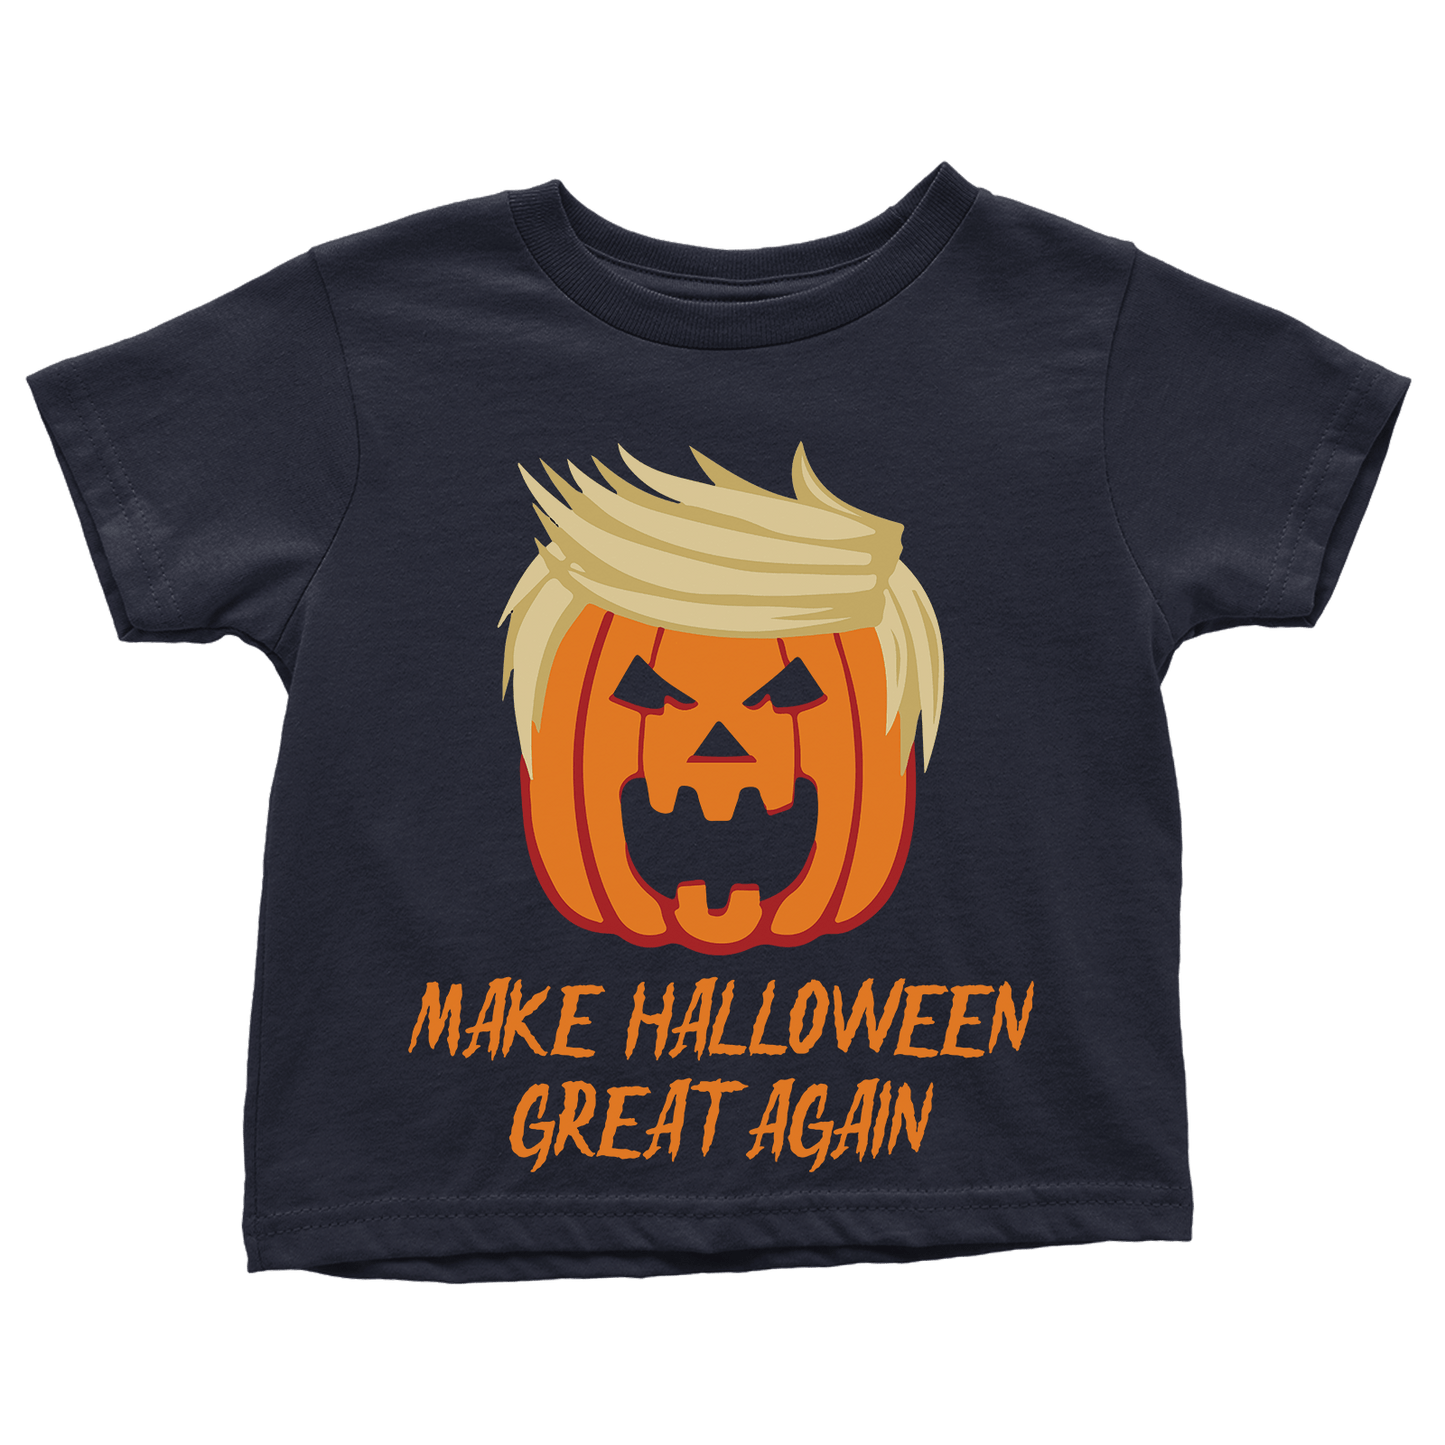 Make Halloween Great Again - Toddlers